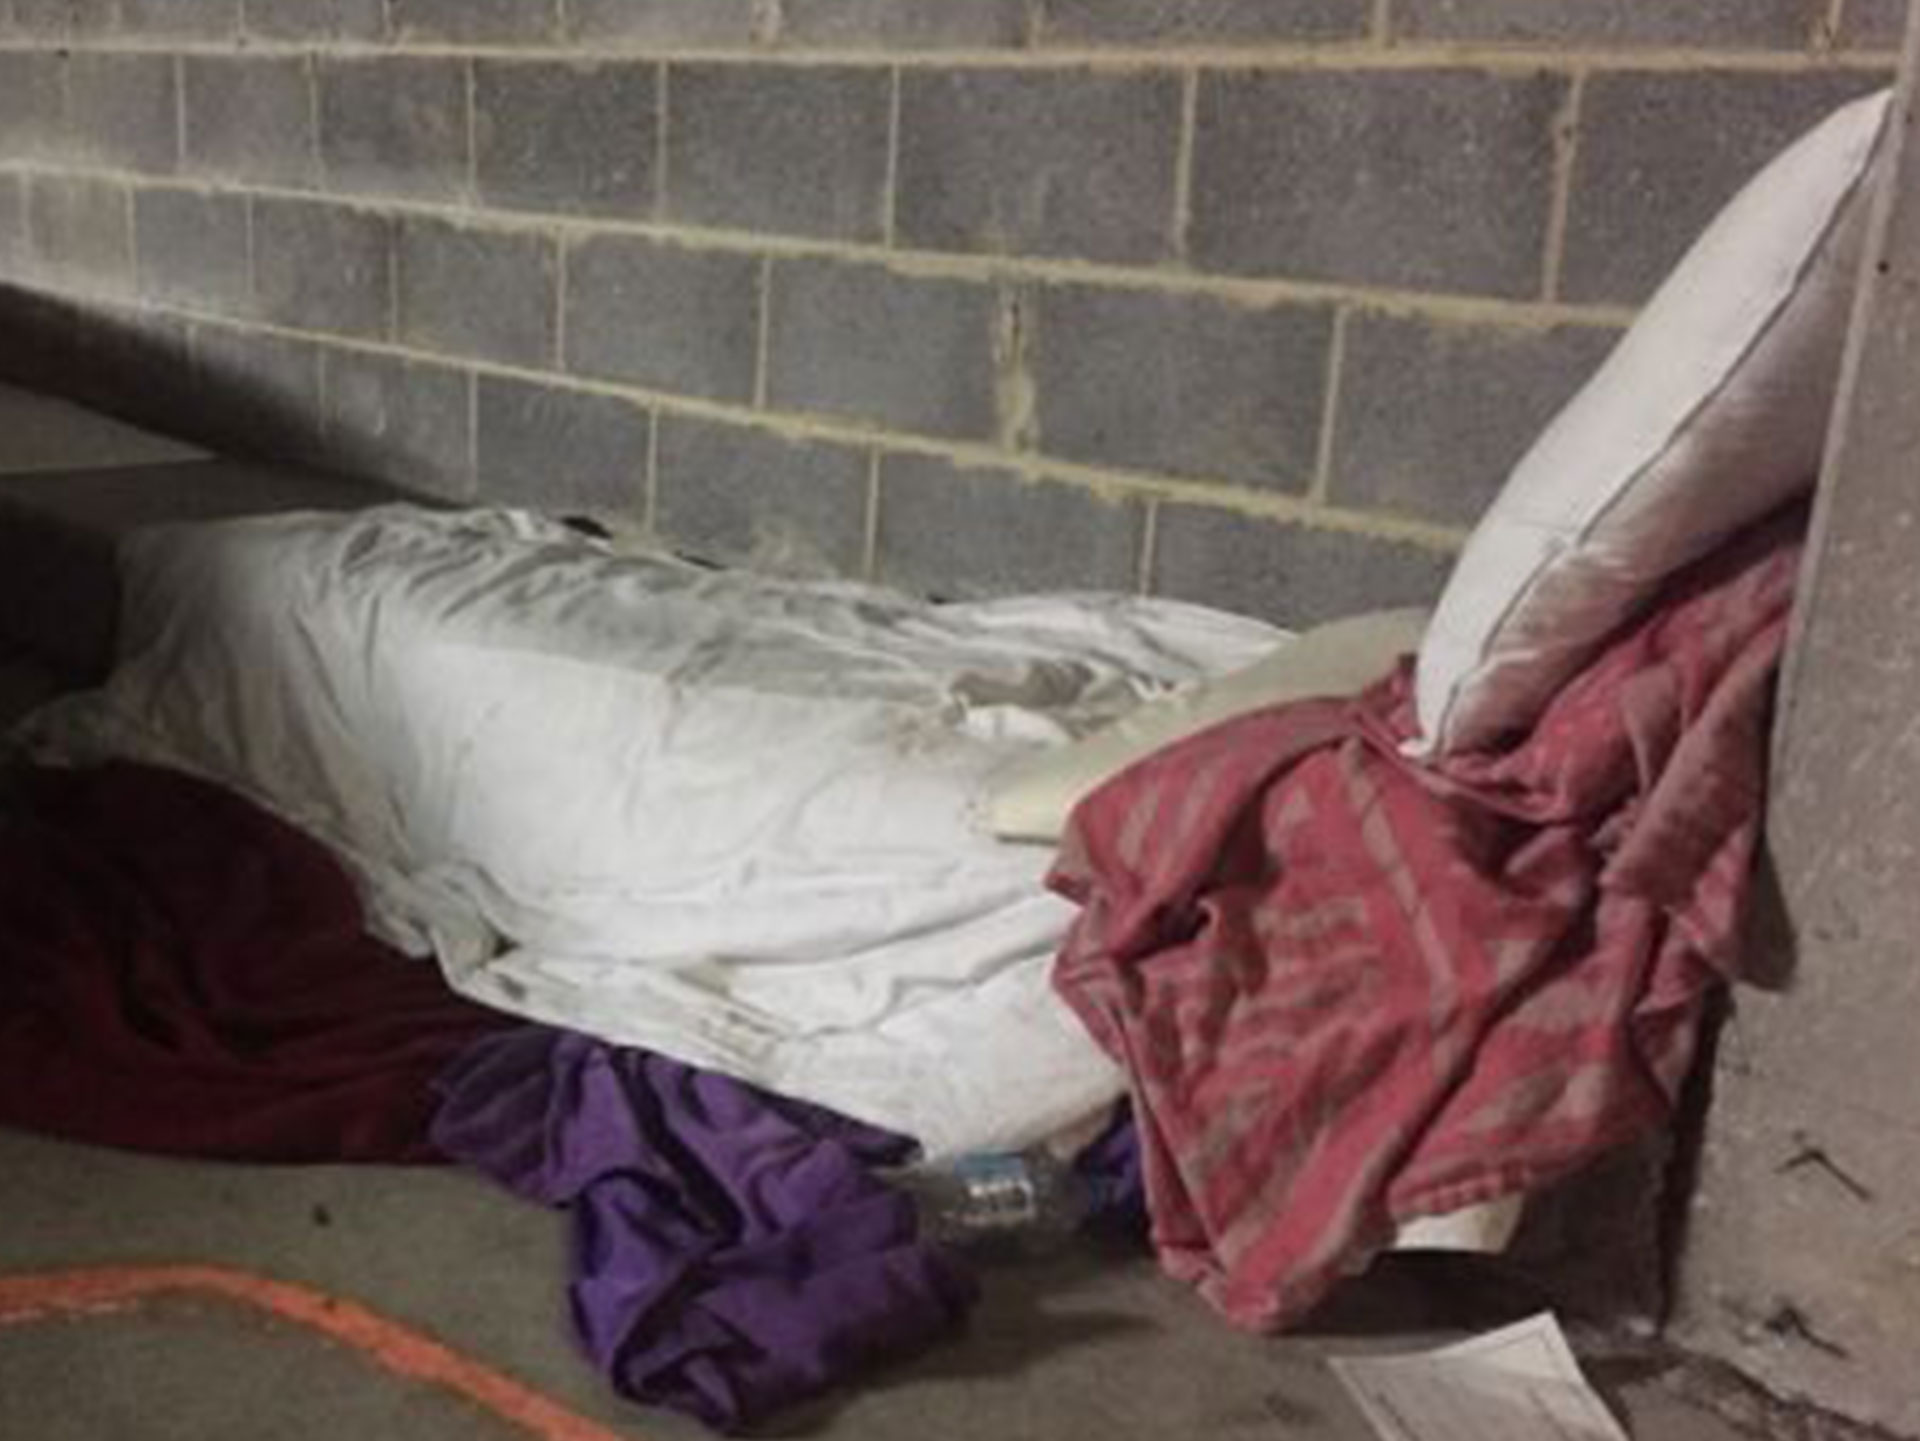 Sydney airport staff sleeping in “Third World conditions”